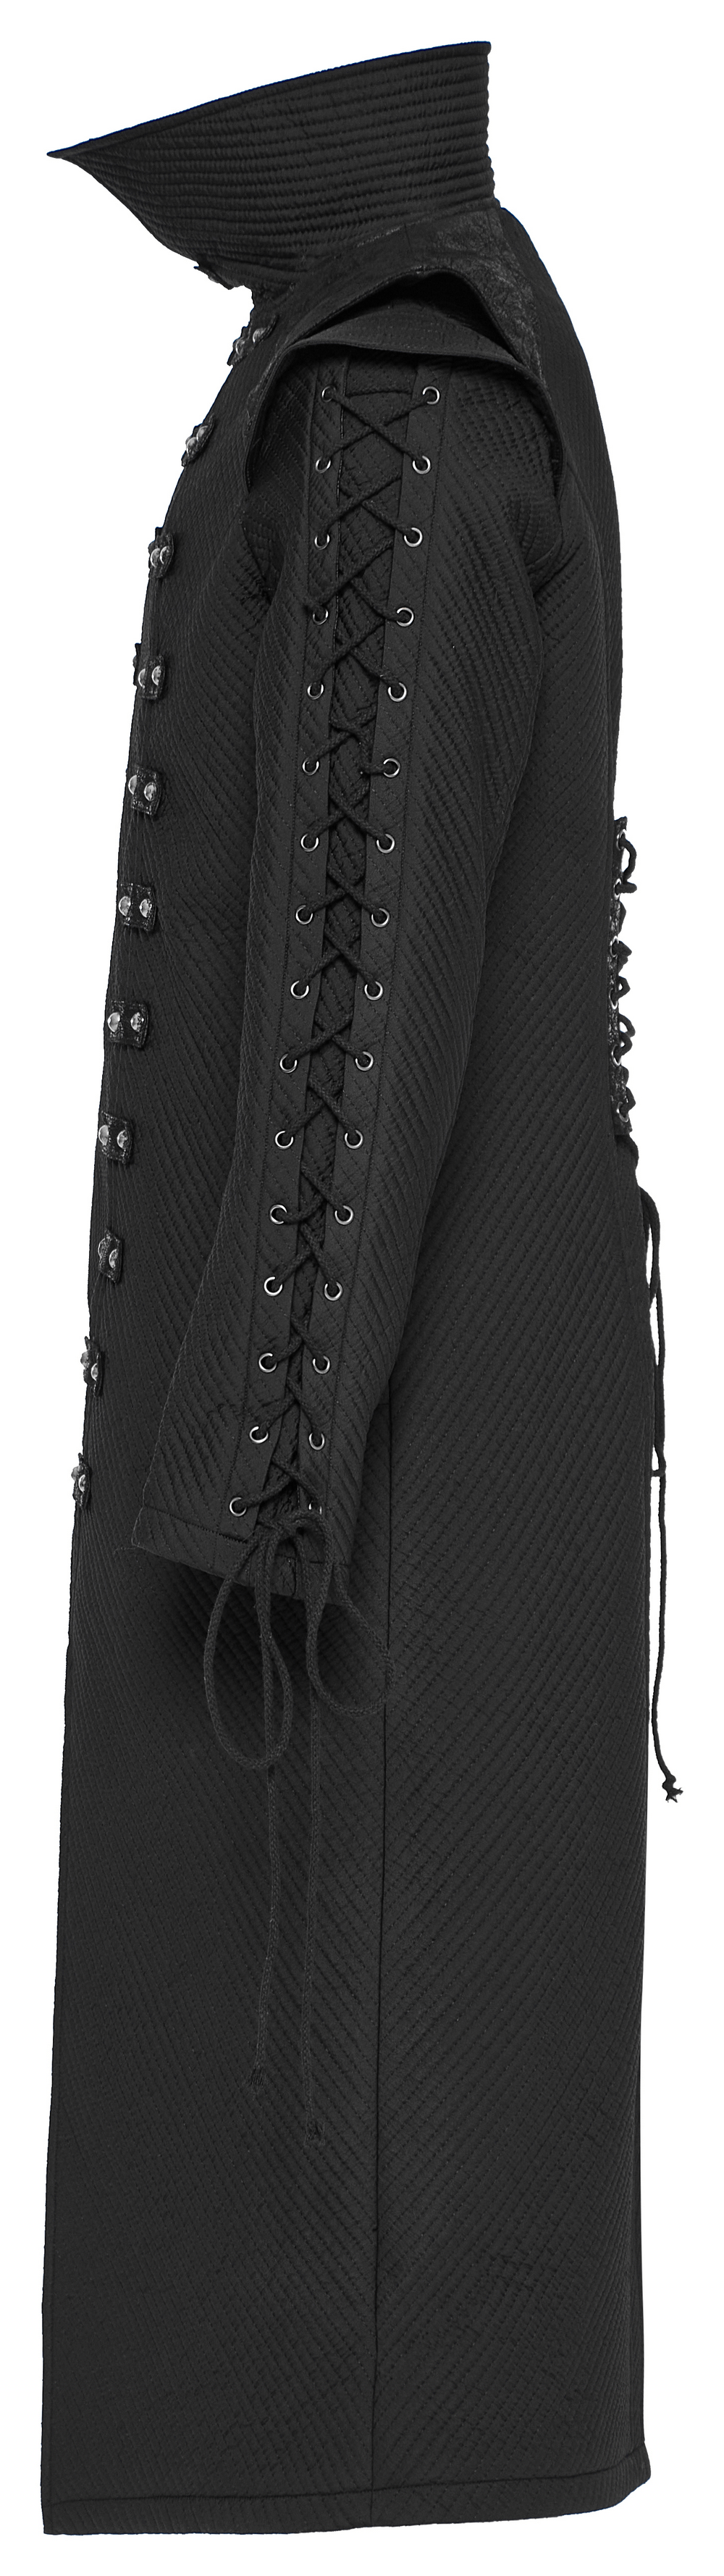 Men's Gothic Long Coat with Rivet Details - HARD'N'HEAVY